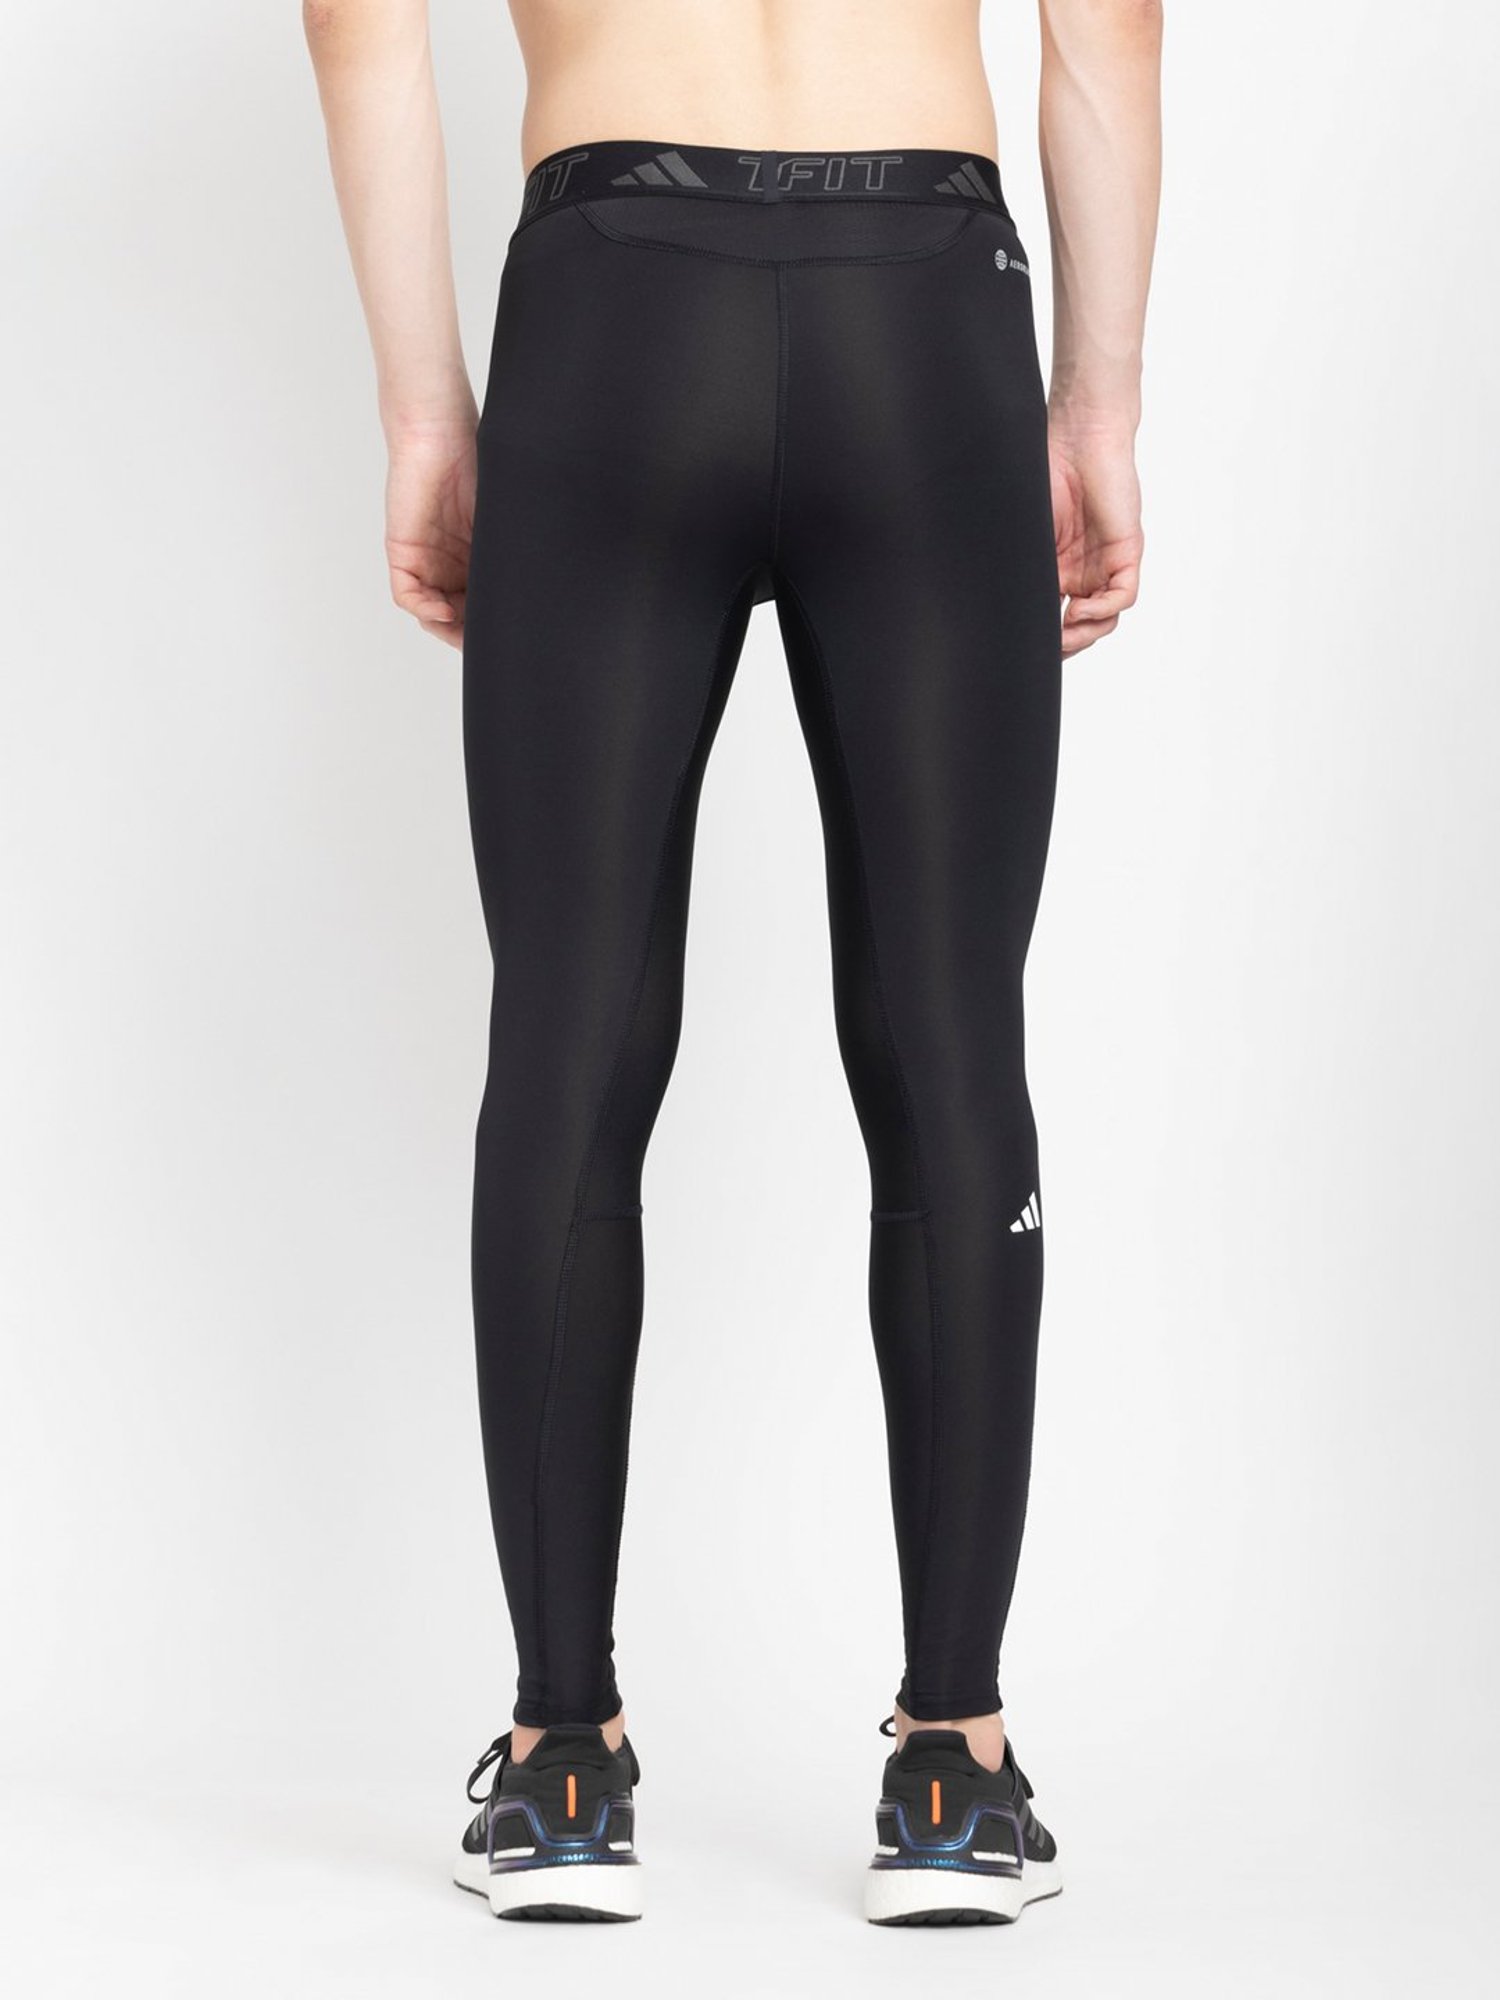 Hanas 2023 Mens Pants Men's Fashion Solid Colour Sweatproof Quick Dry Sports  Leggings Yoga Pants Navy XL - Walmart.com